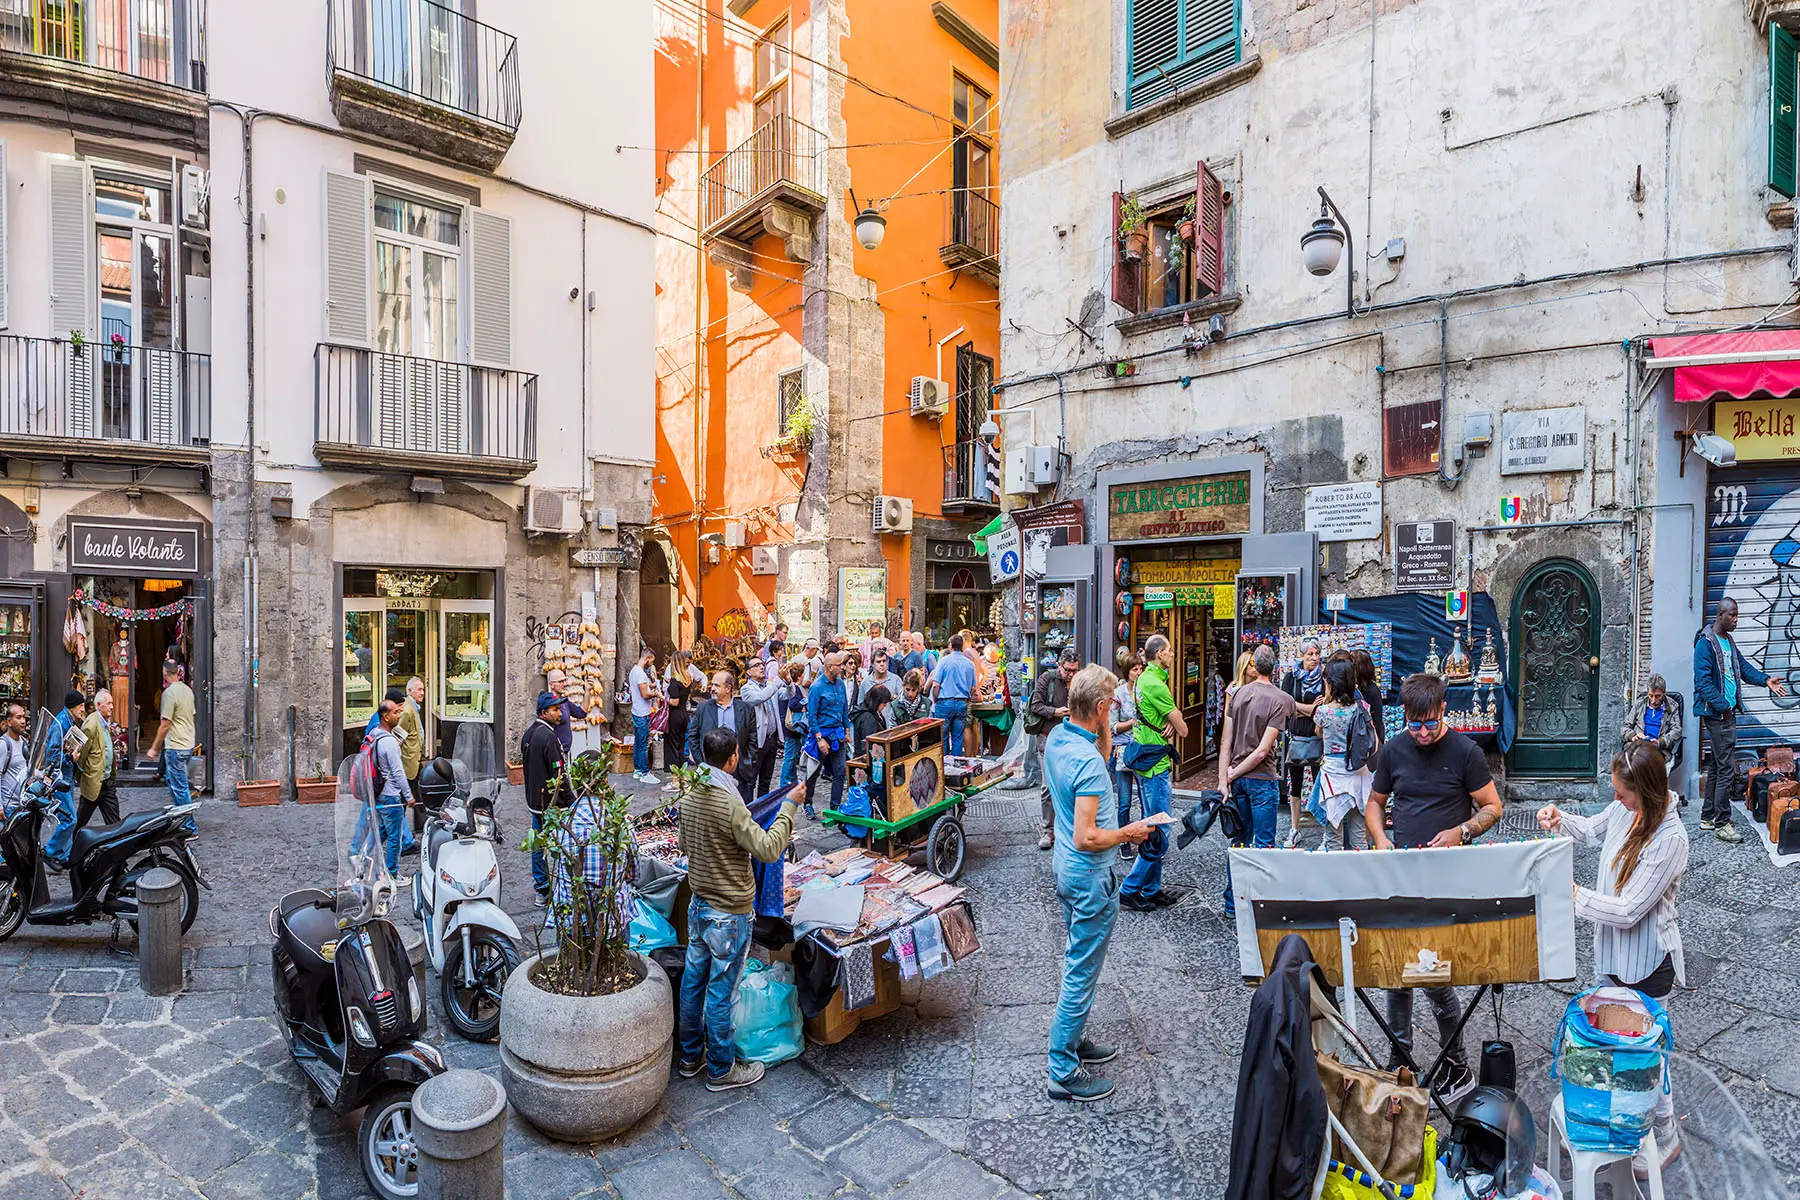 Typical street life at the corner between Via San Gregorio Armeno and Via San Biagio dei Librai, with people